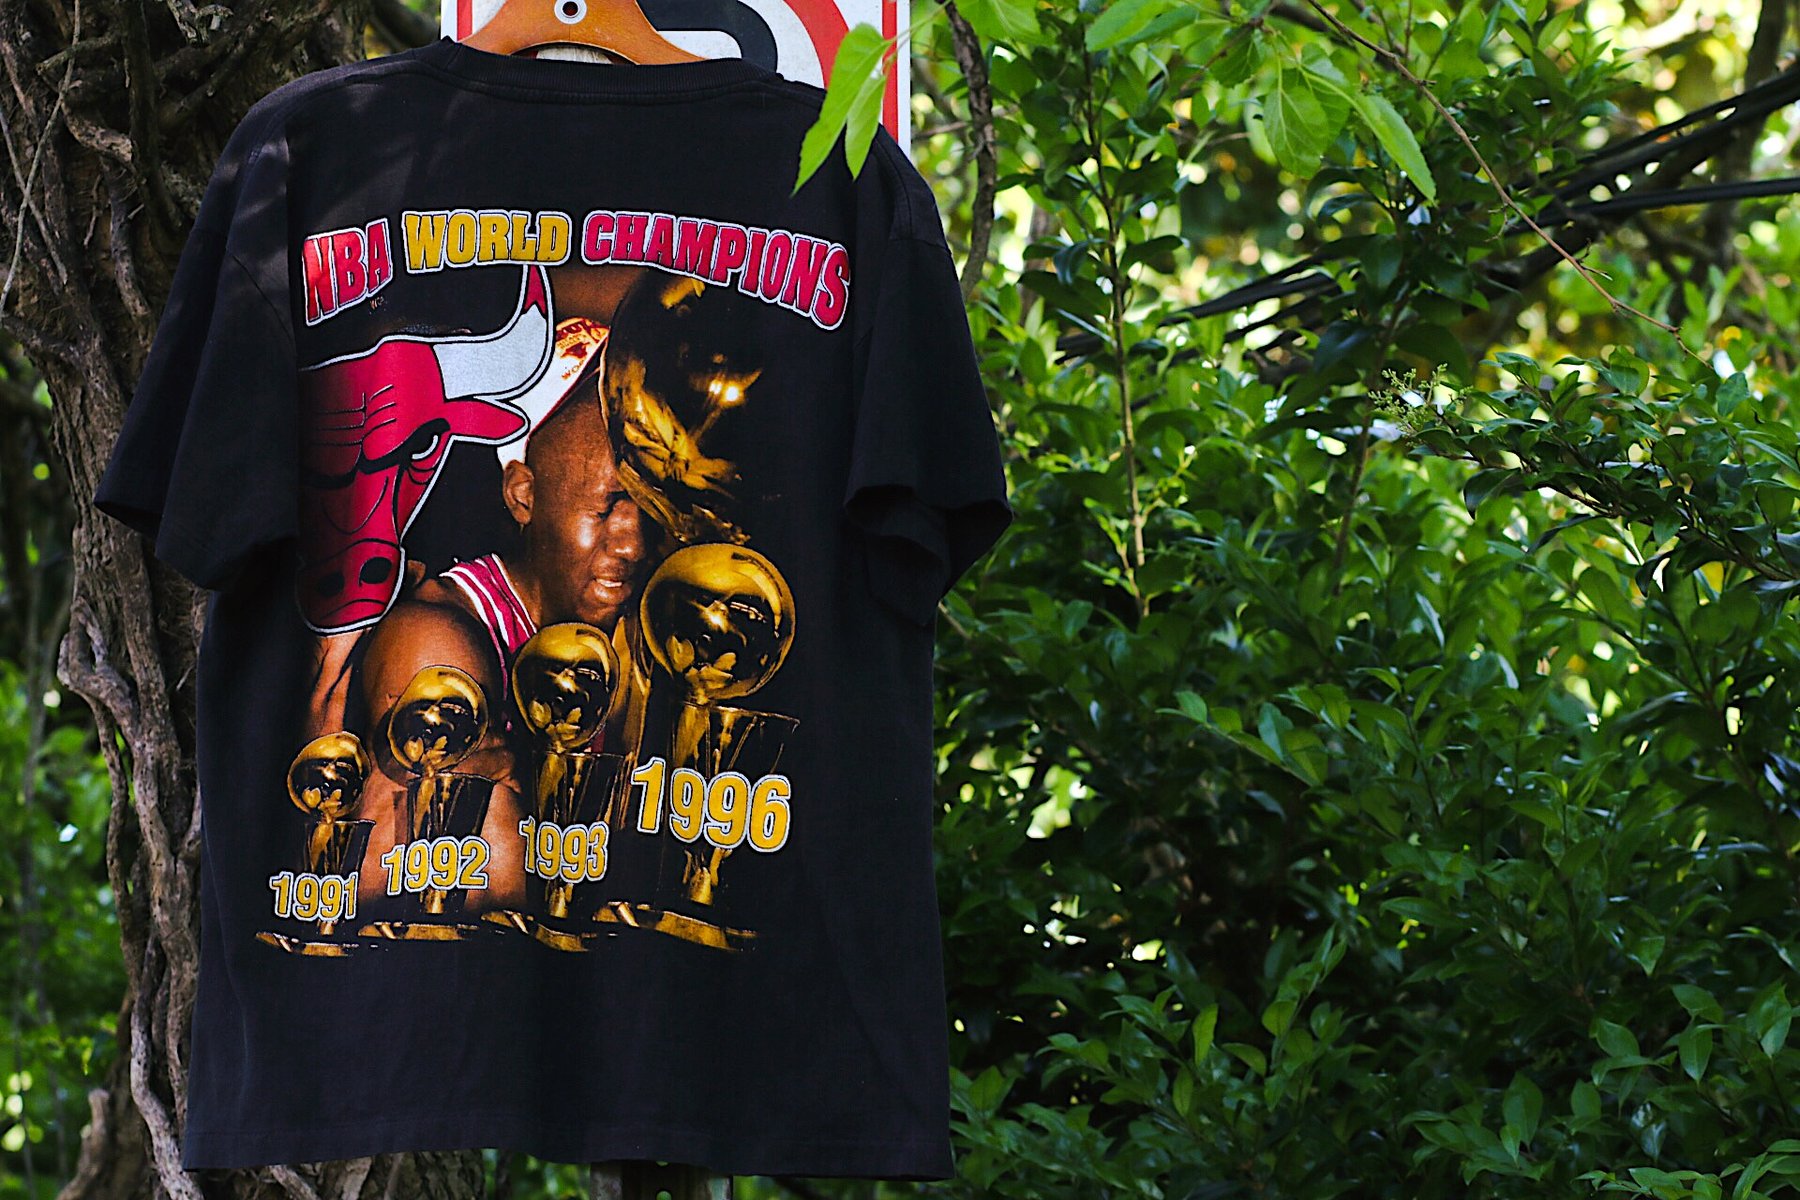 Vintage 1996 Chicago Bulls NBA World Champs Rap Tee T-Shirt